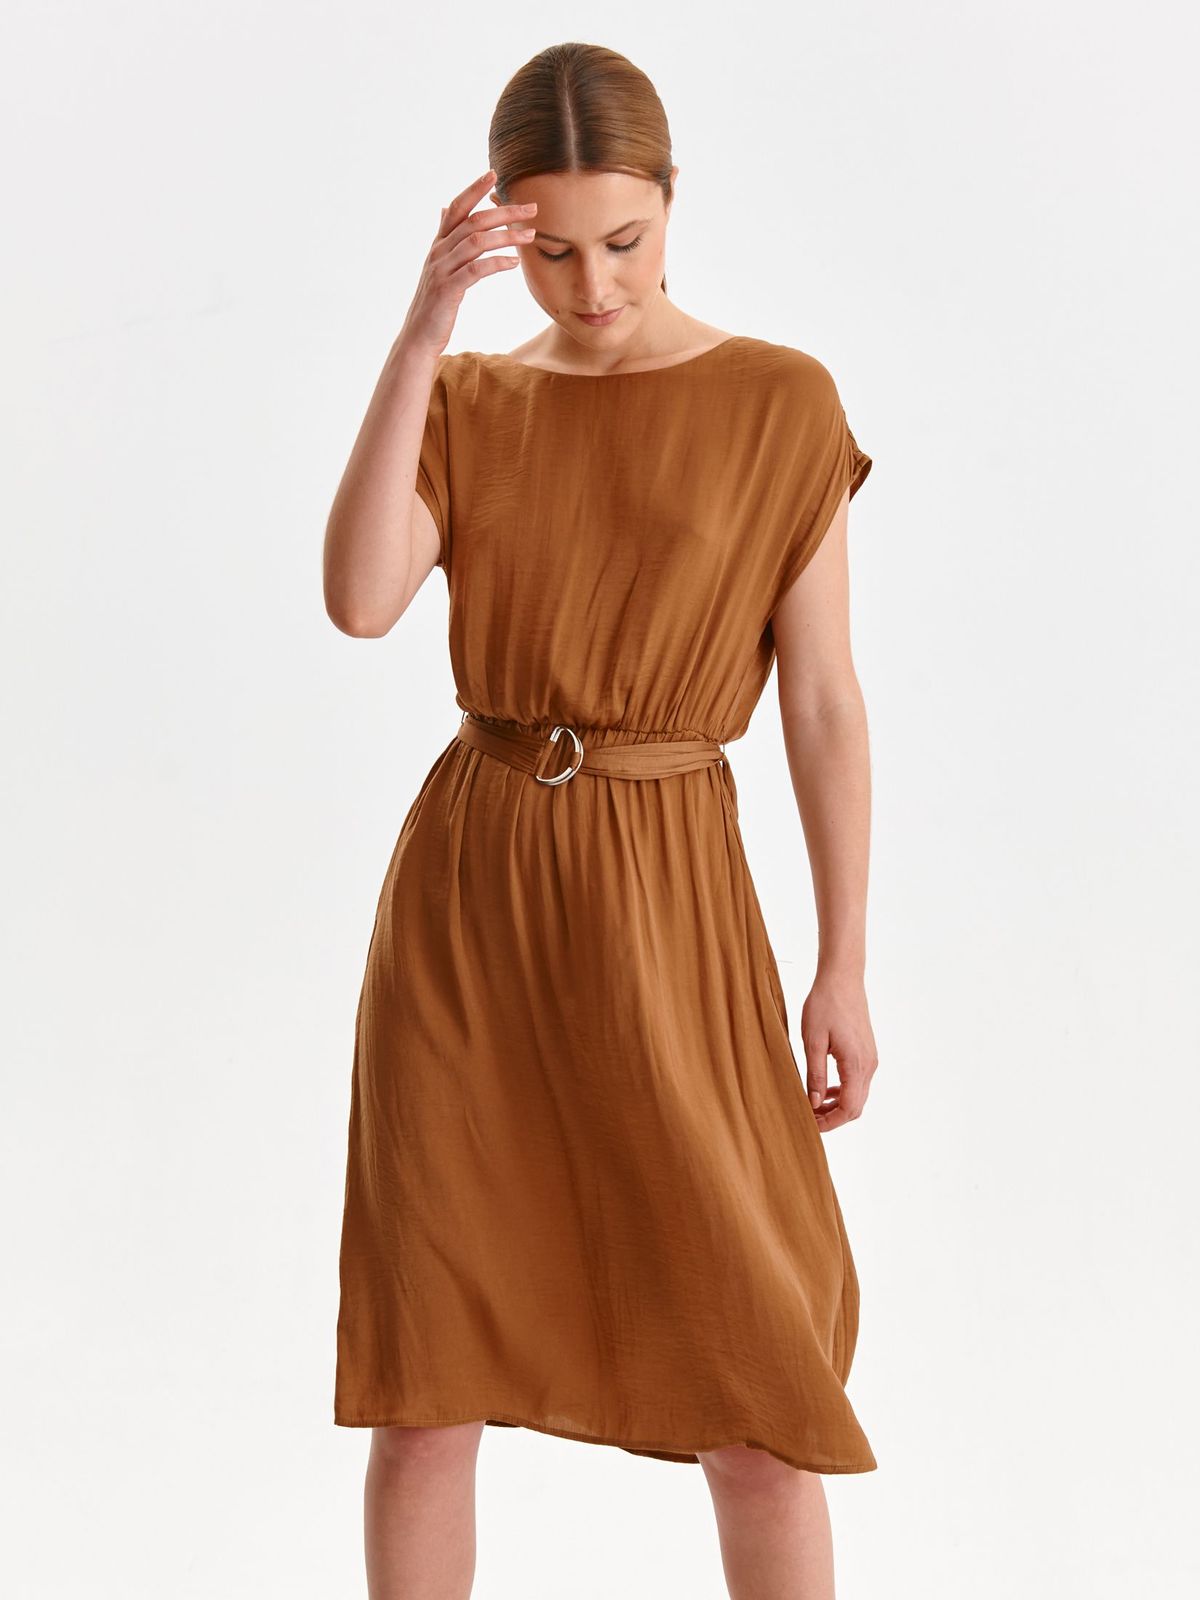 Brown dress thin fabric midi cloche with elastic waist